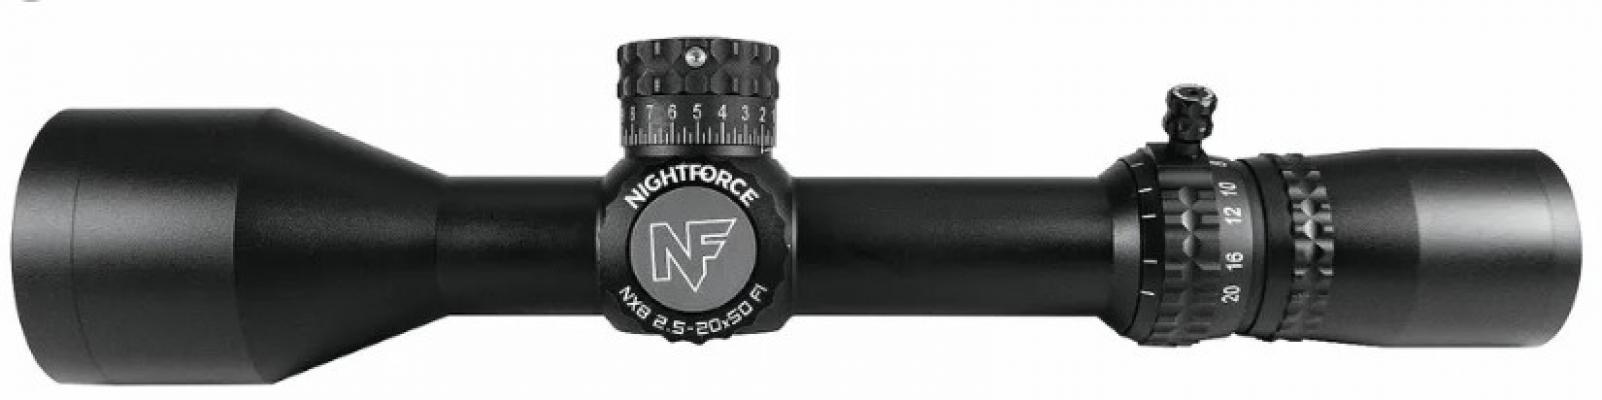 Оптический прицел Nightforce NX8 2.5-20x50 F1 фото 1